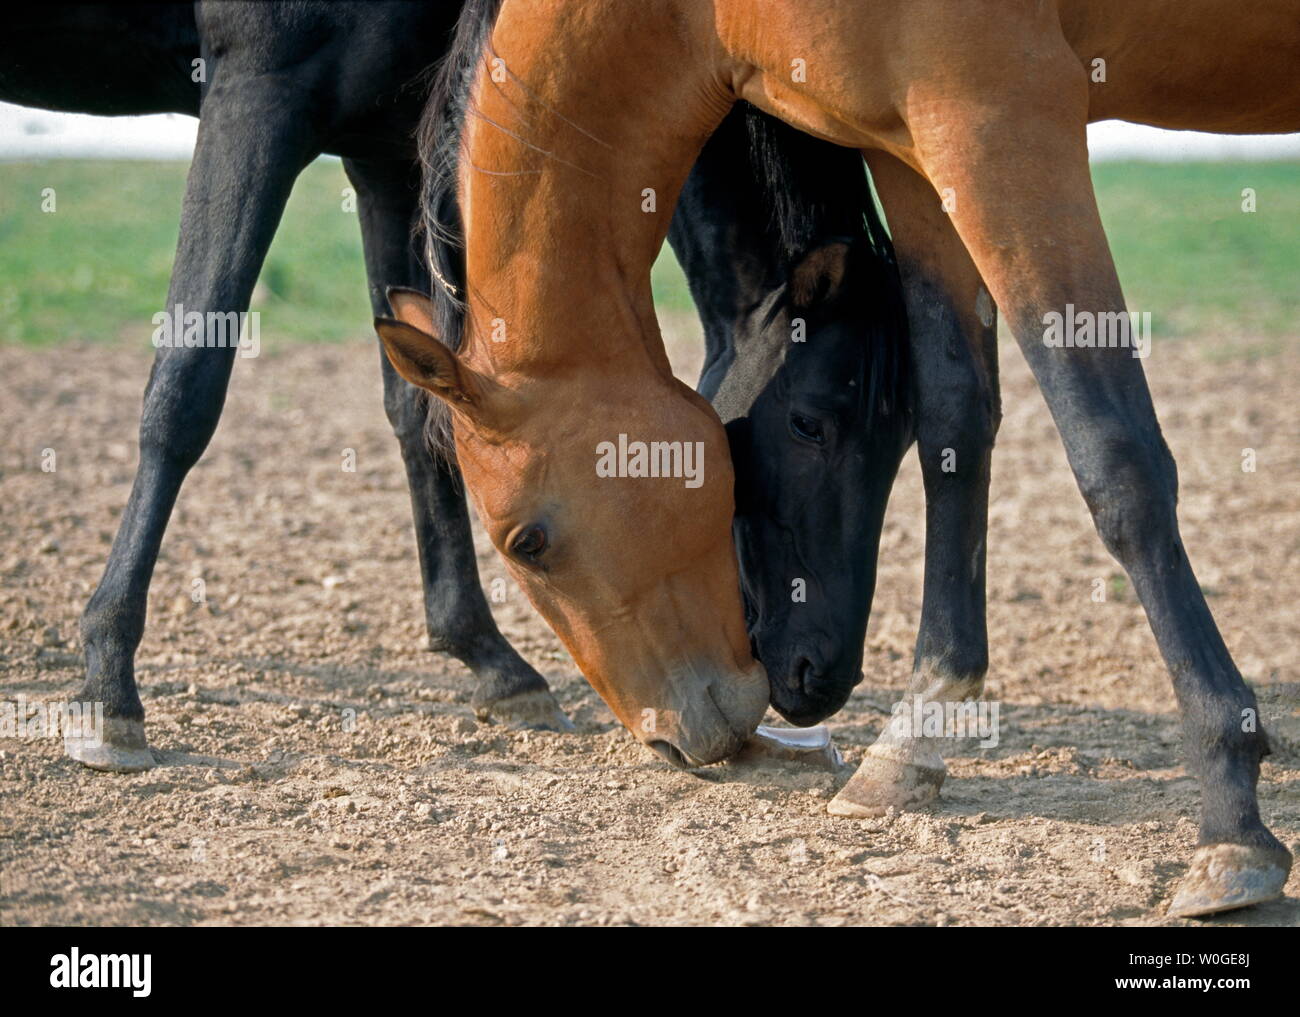 ACHAL TEKE HORSES Stock Photo